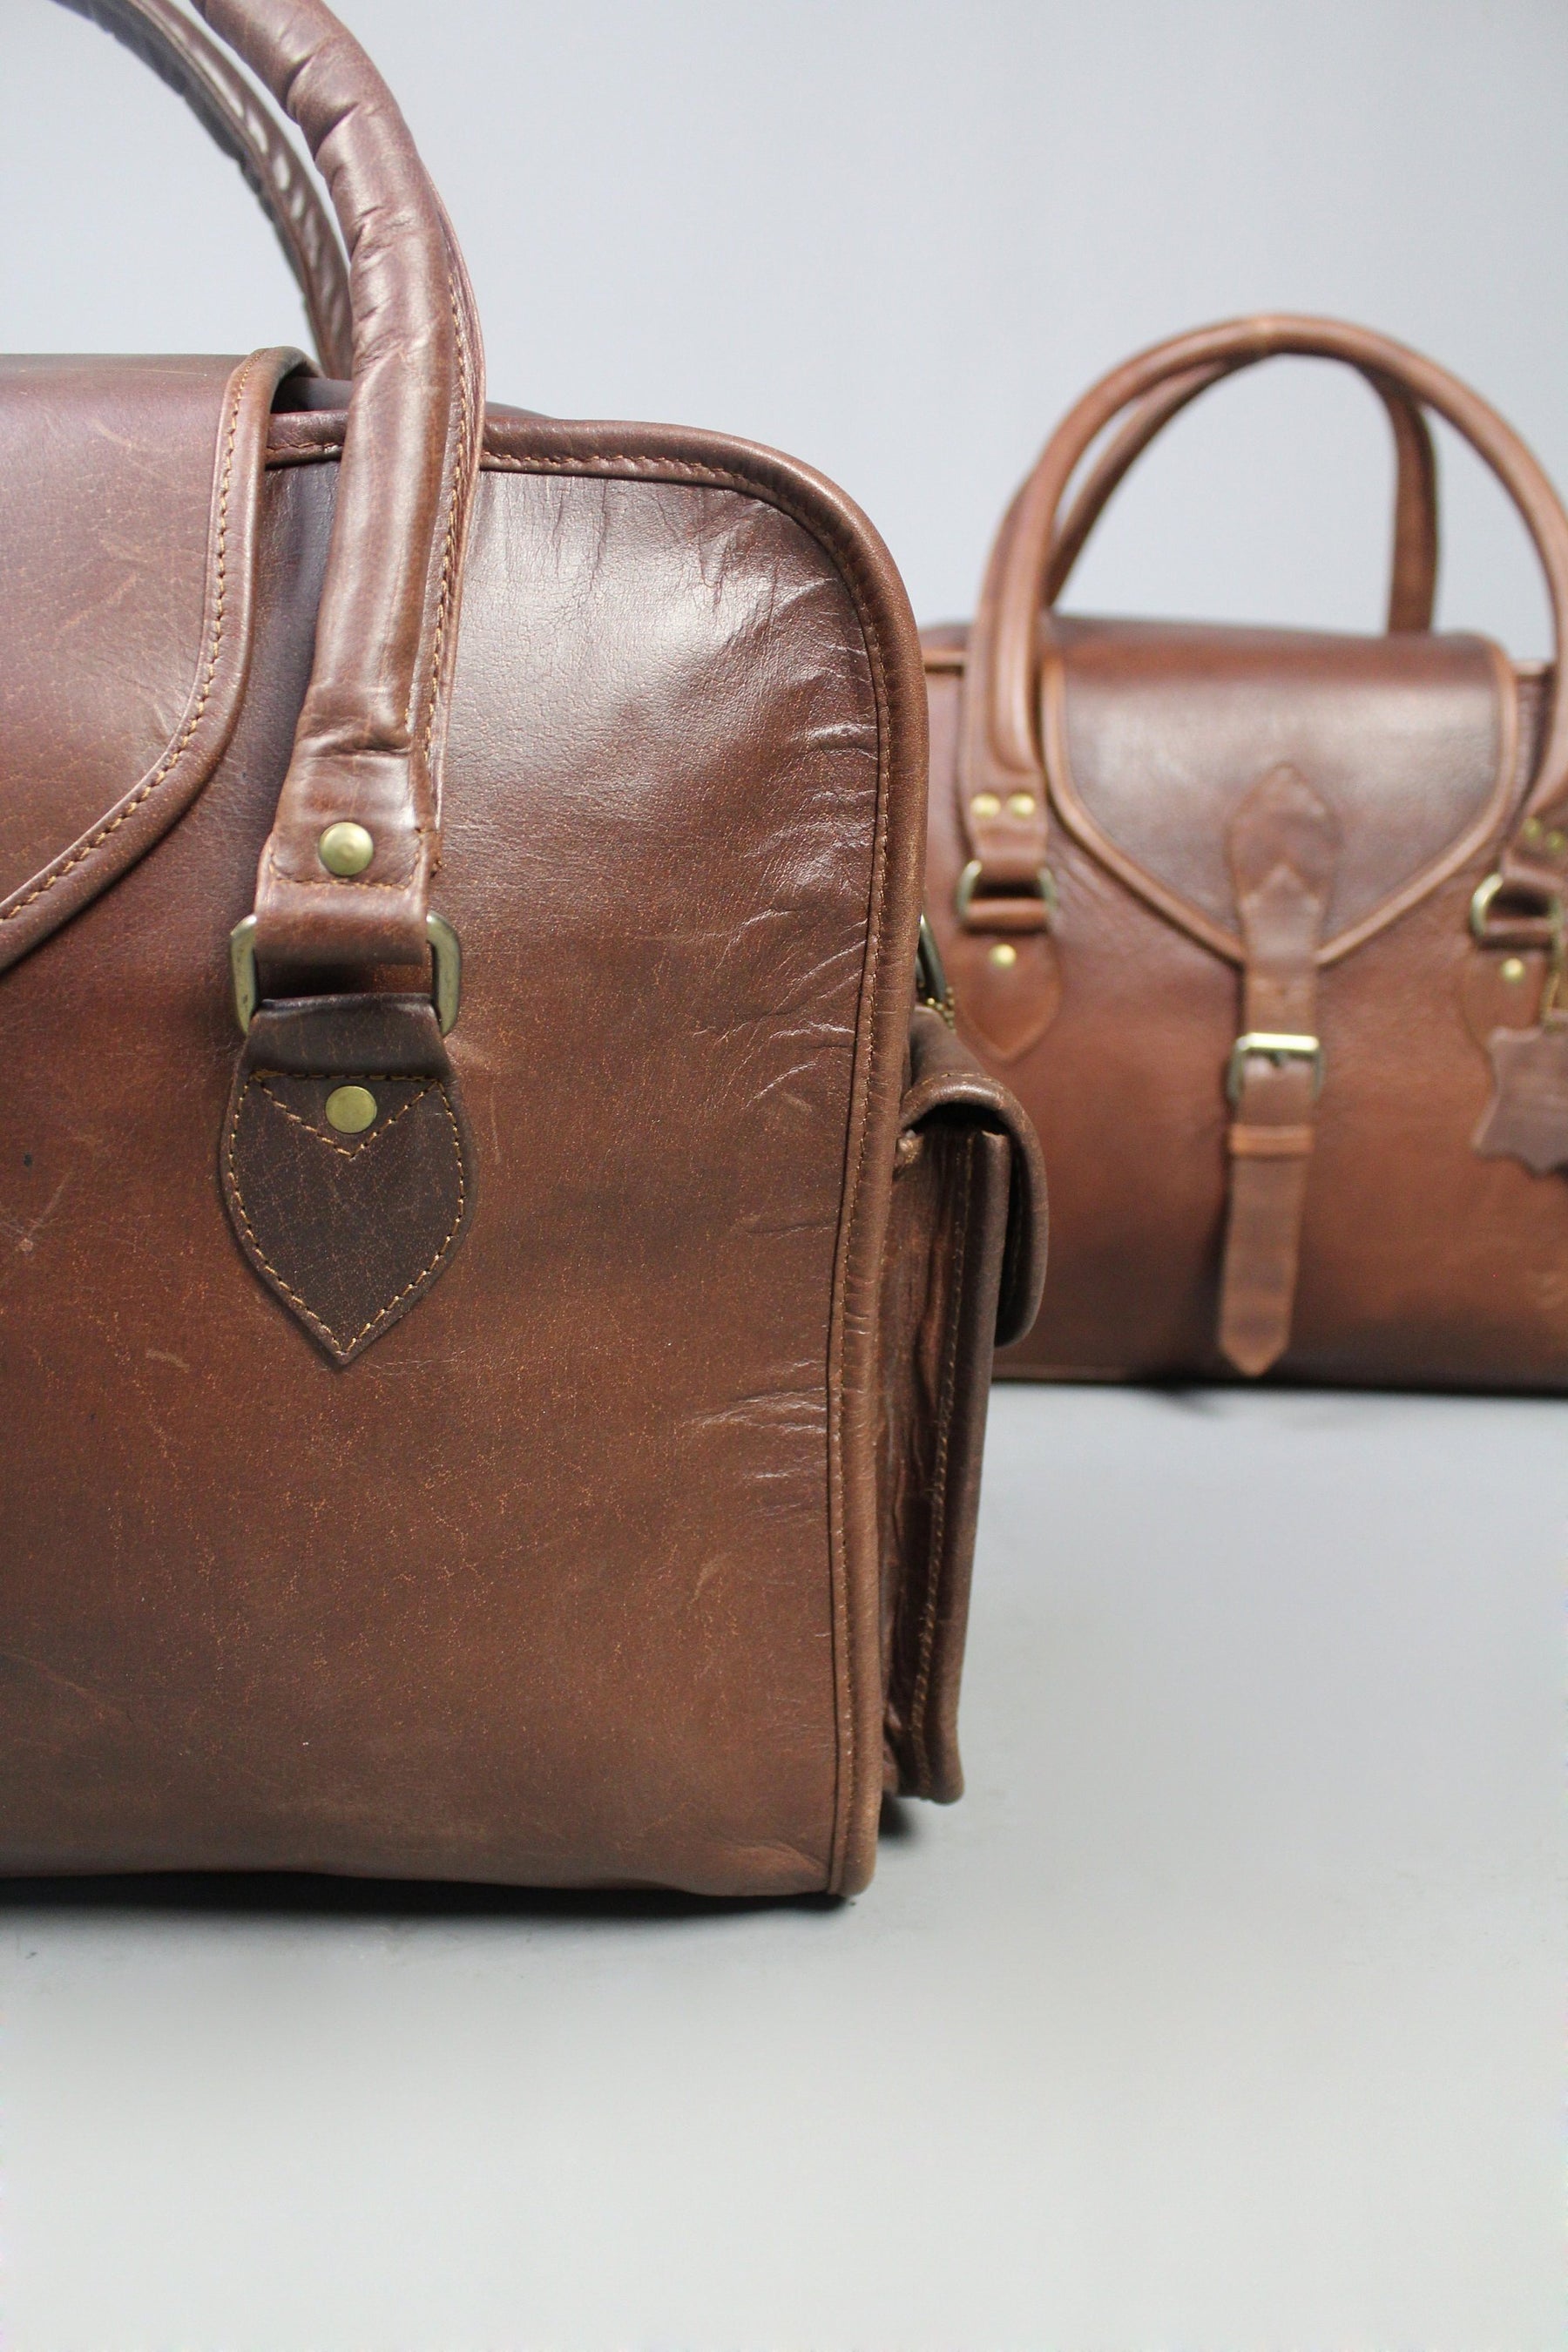 Master Mason Blue Lodge Travel Bag - Vintage Brown Leather - Bricks Masons